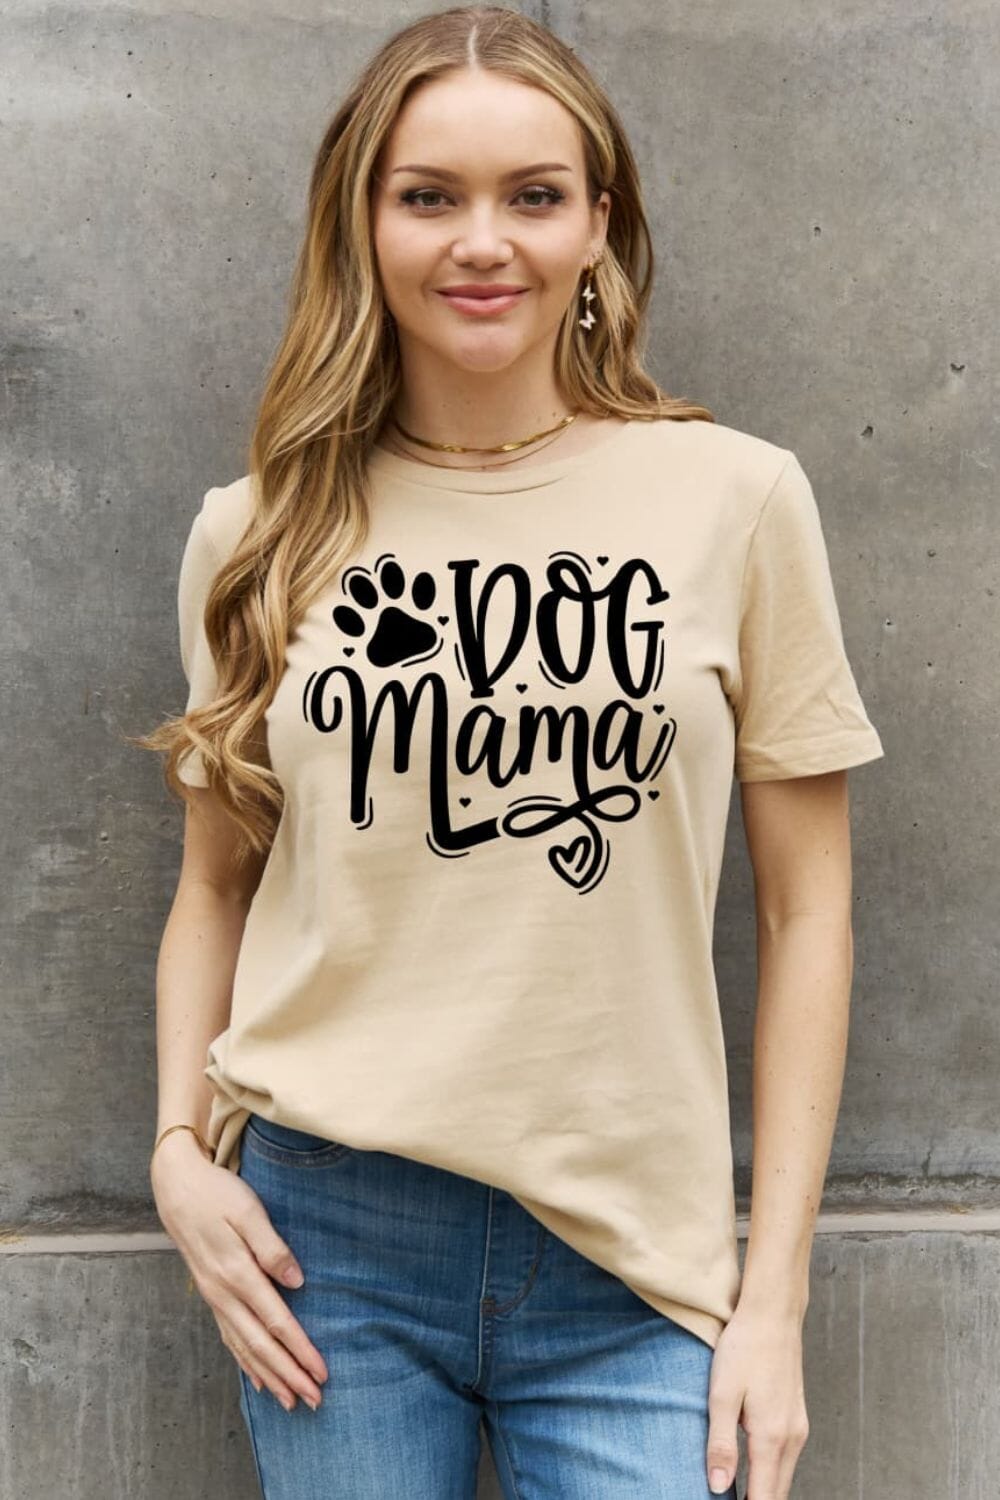 DOG MAMA Graphic Cotton T-Shirt - Sydney So Sweet